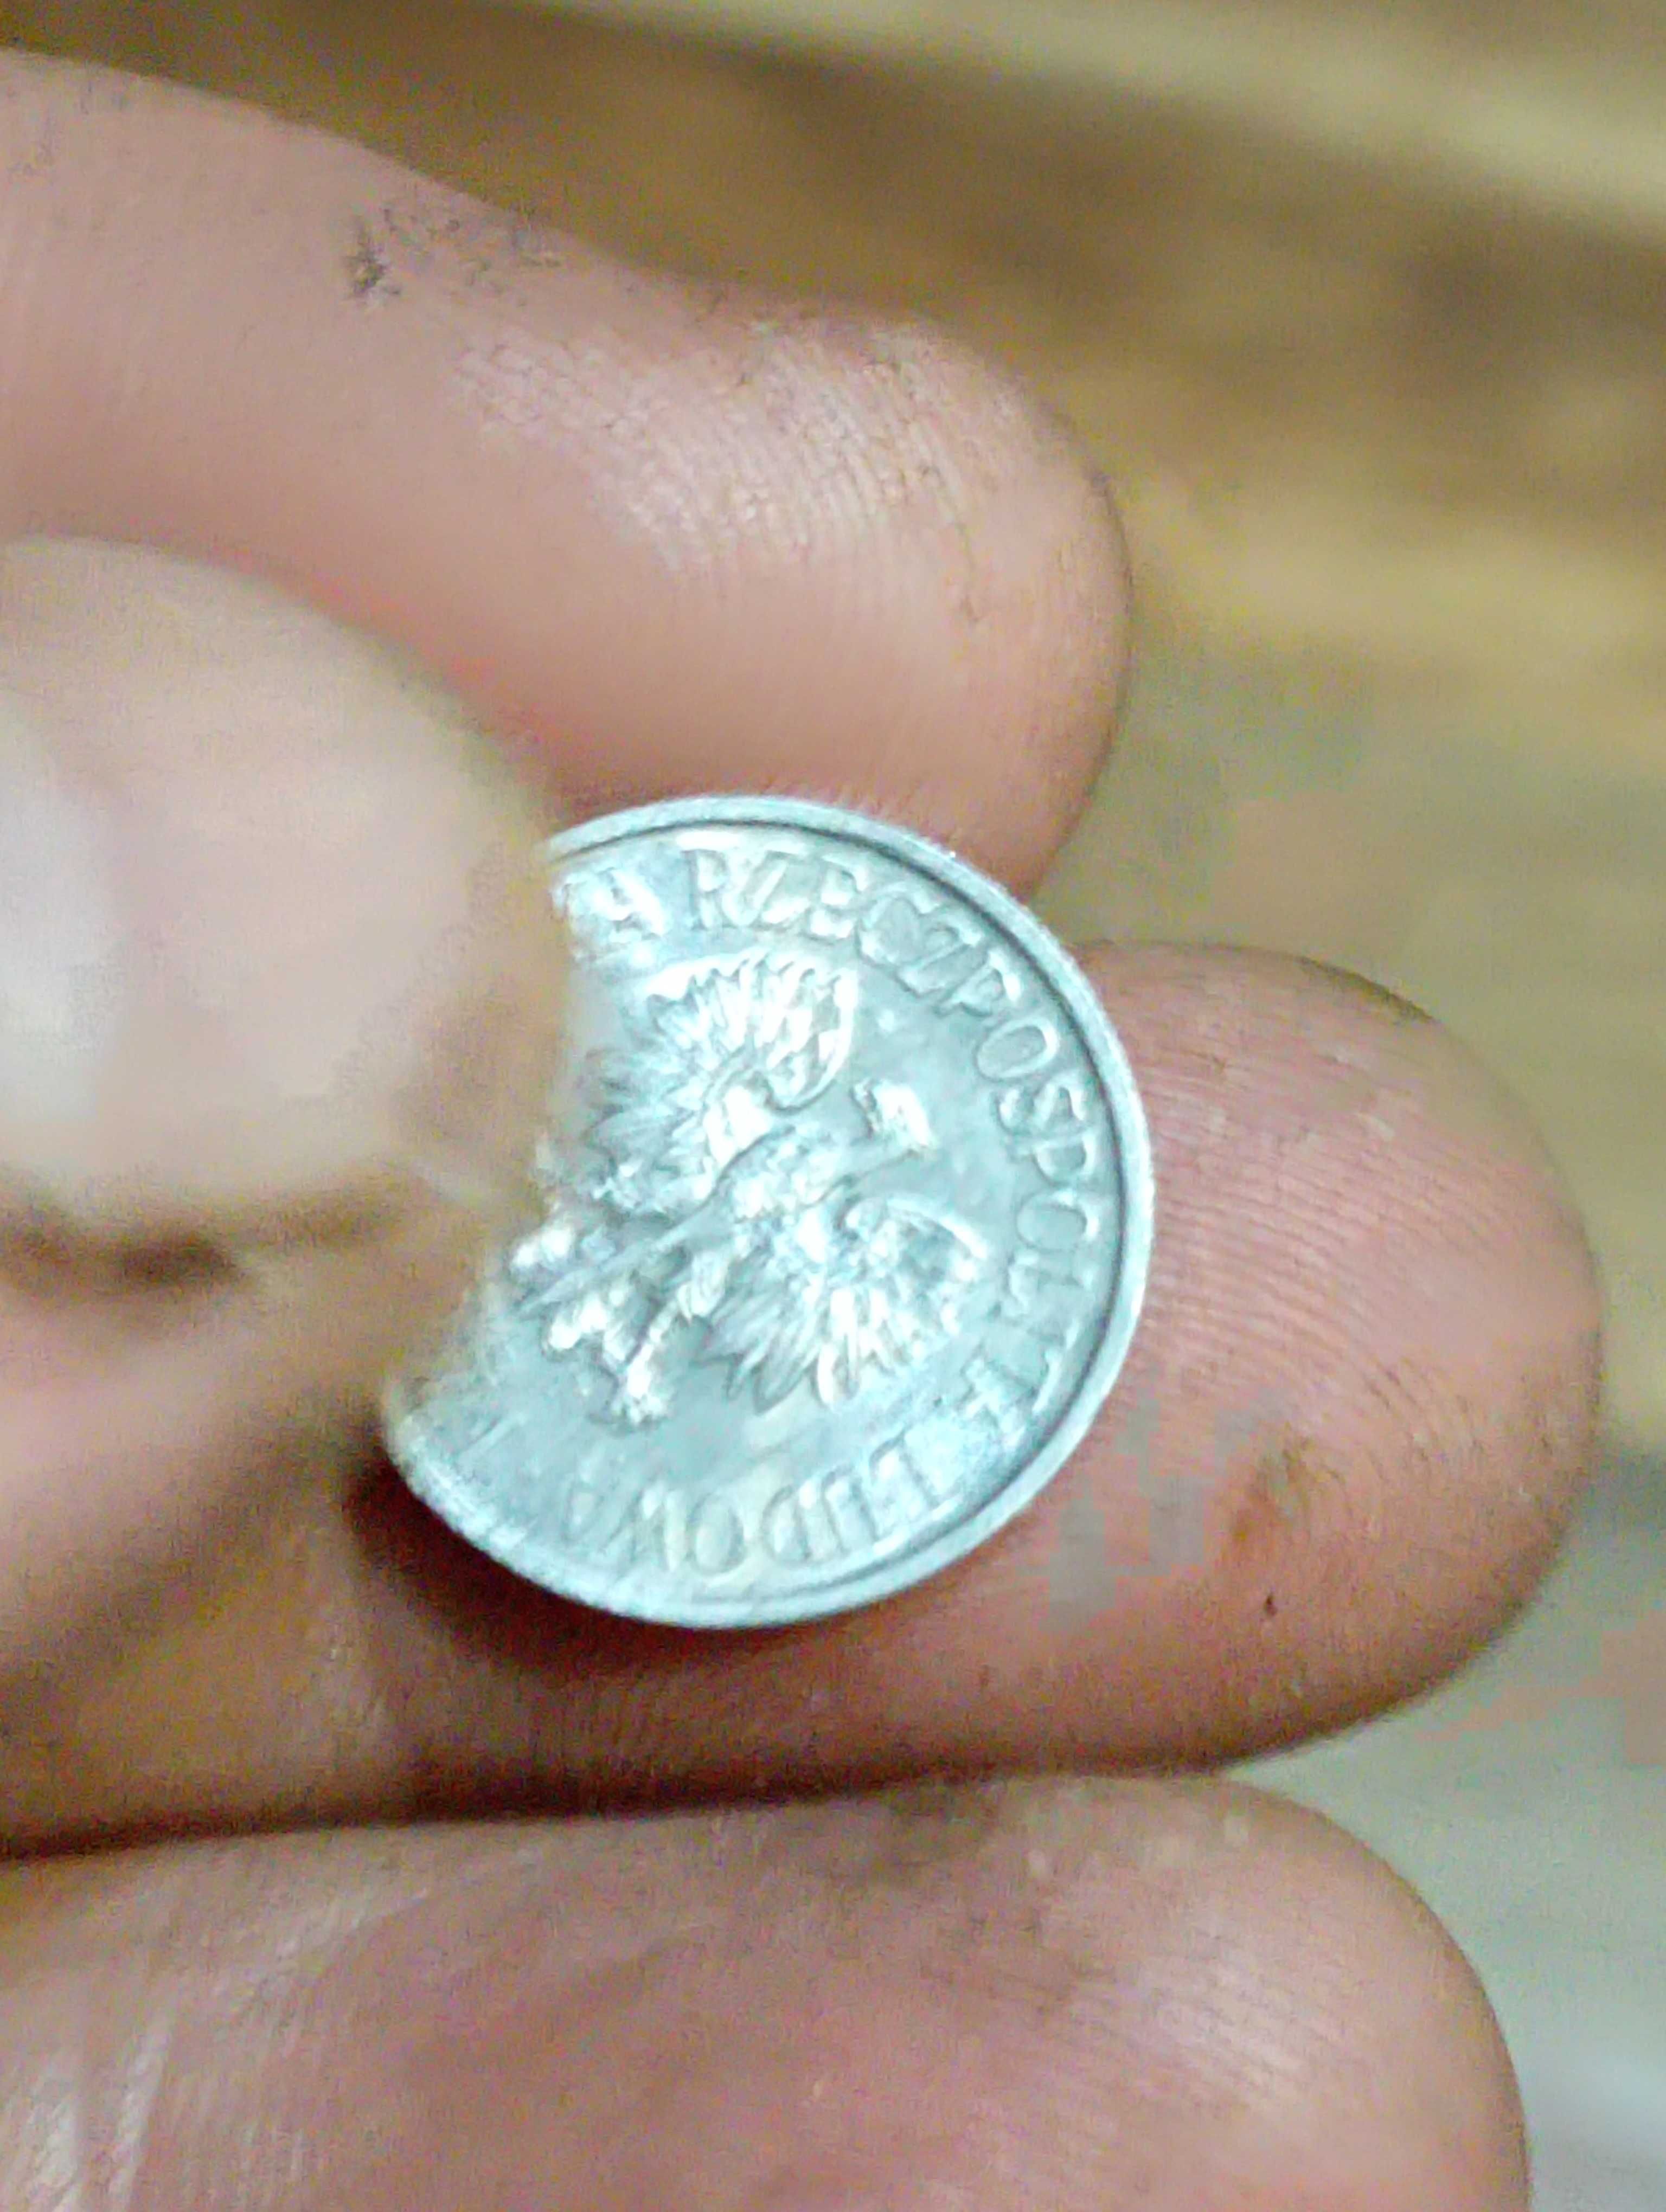 Moneta 5 groszy 1971 r